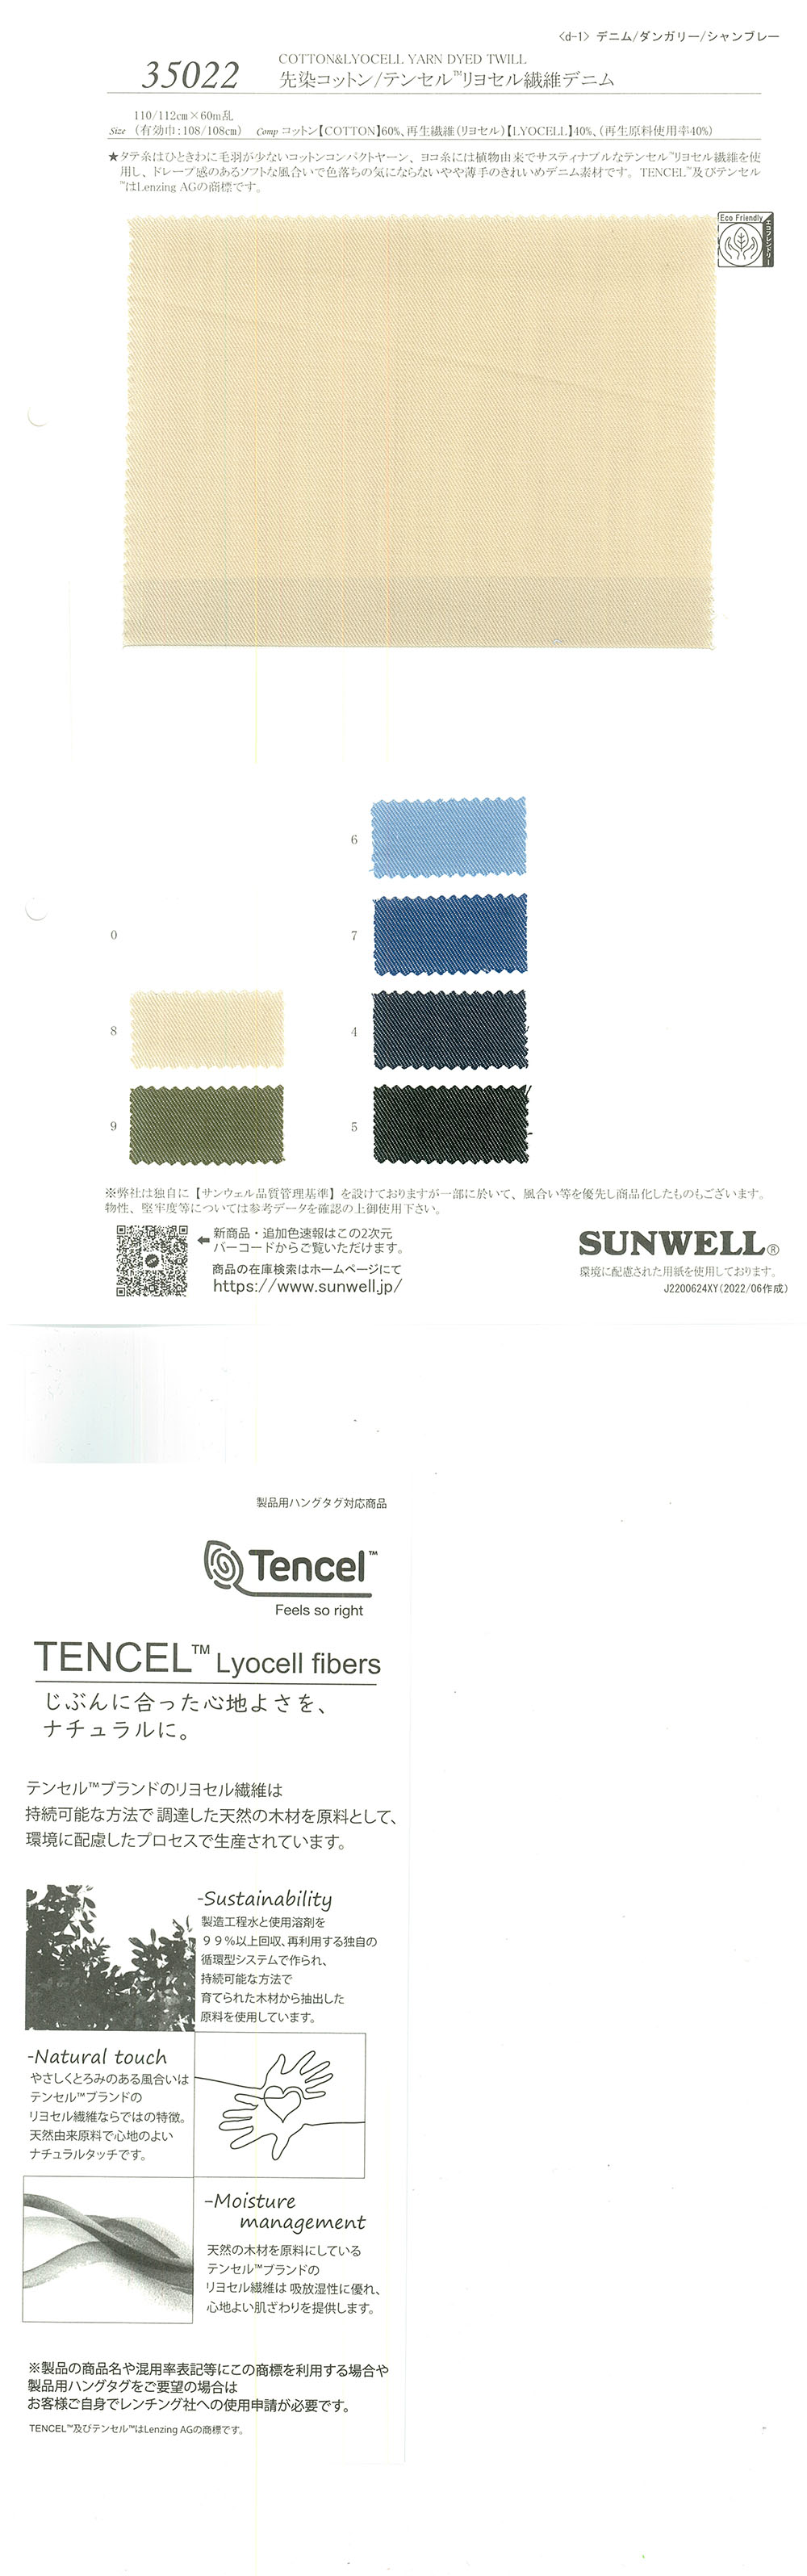 35022 Yarn-dyed Cotton / Tencel (TM) Lyocell Fiber Denim[Textile / Fabric] SUNWELL